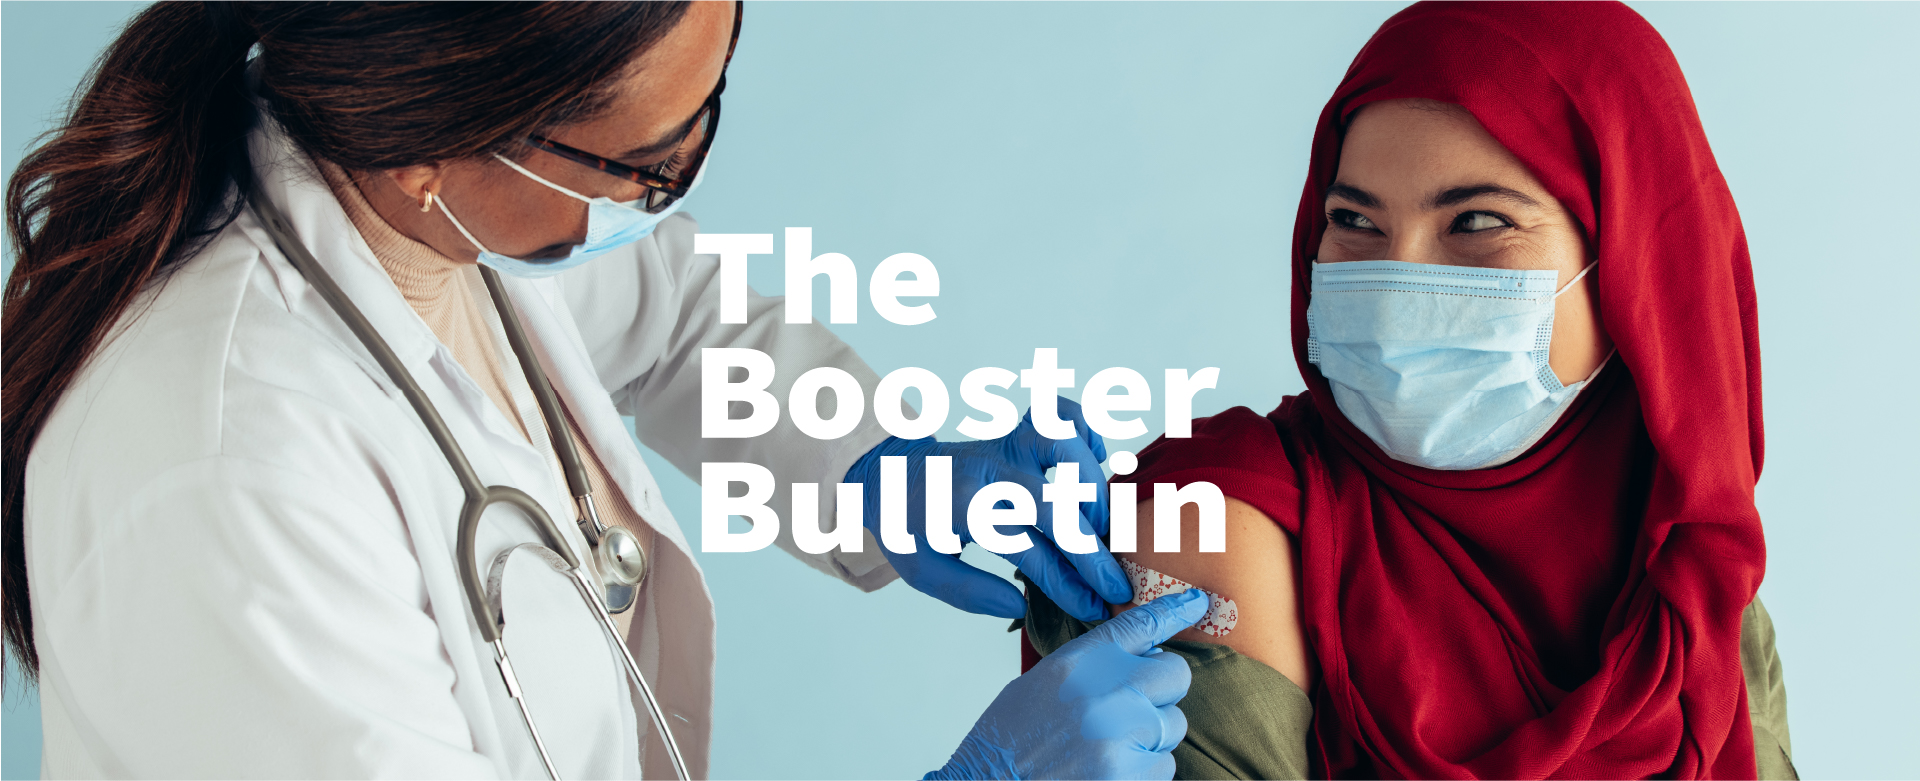 Booster Bulletin Header Image